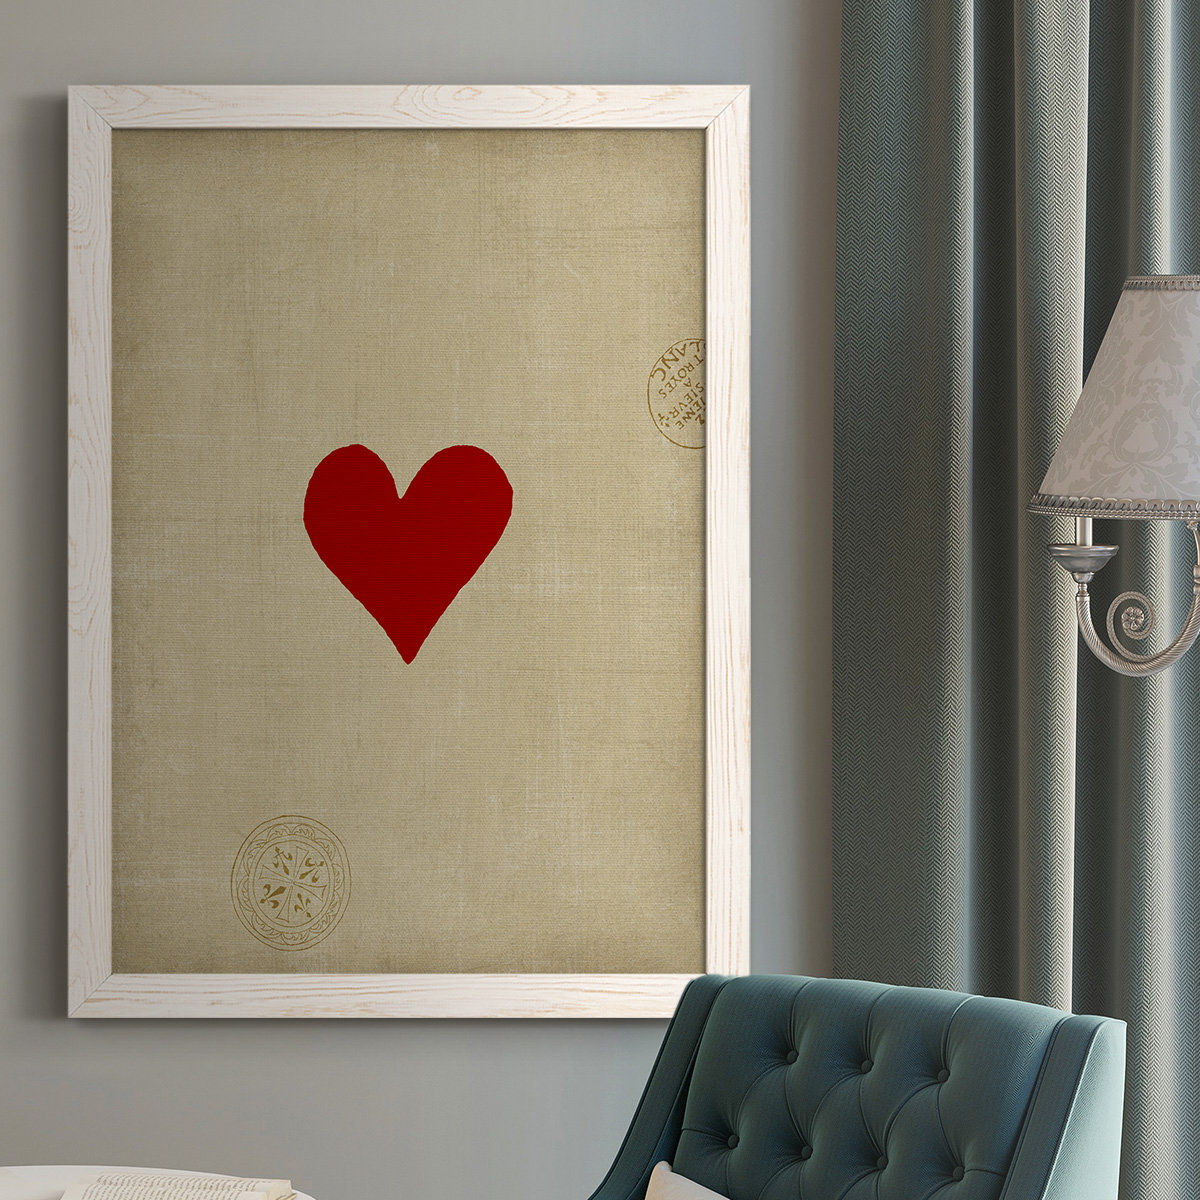  Valentine Framed Canvas Wall Art for Living Room Heart